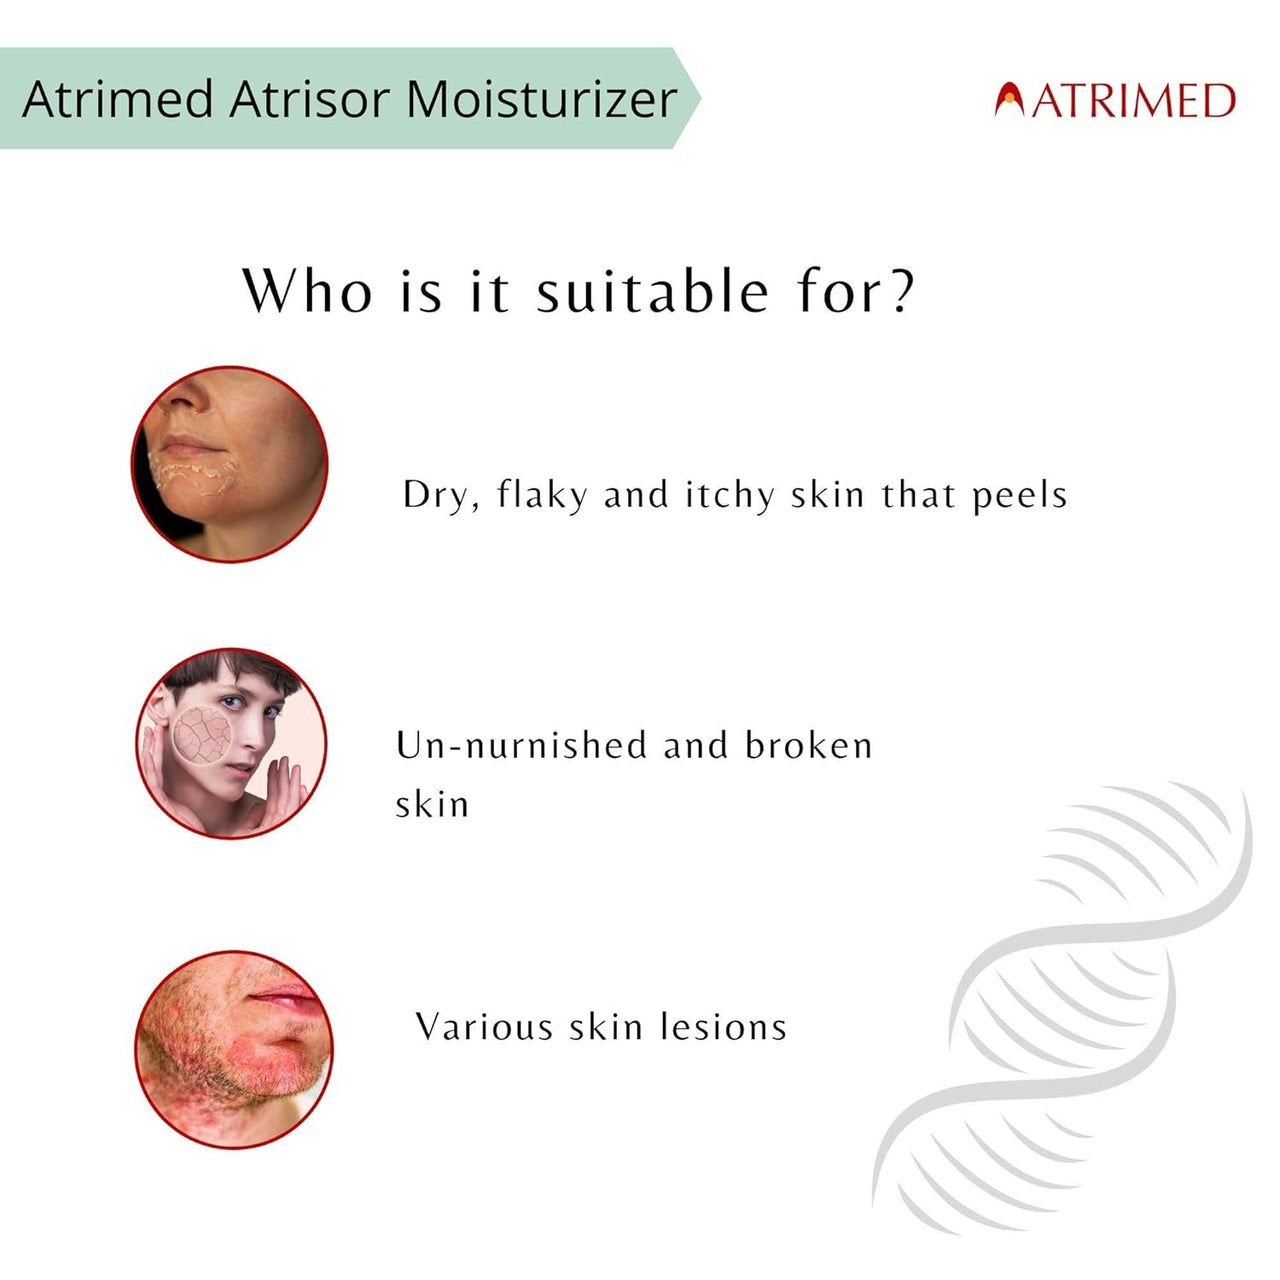 Atrimed Ayurvedic Atrisor moisturizer